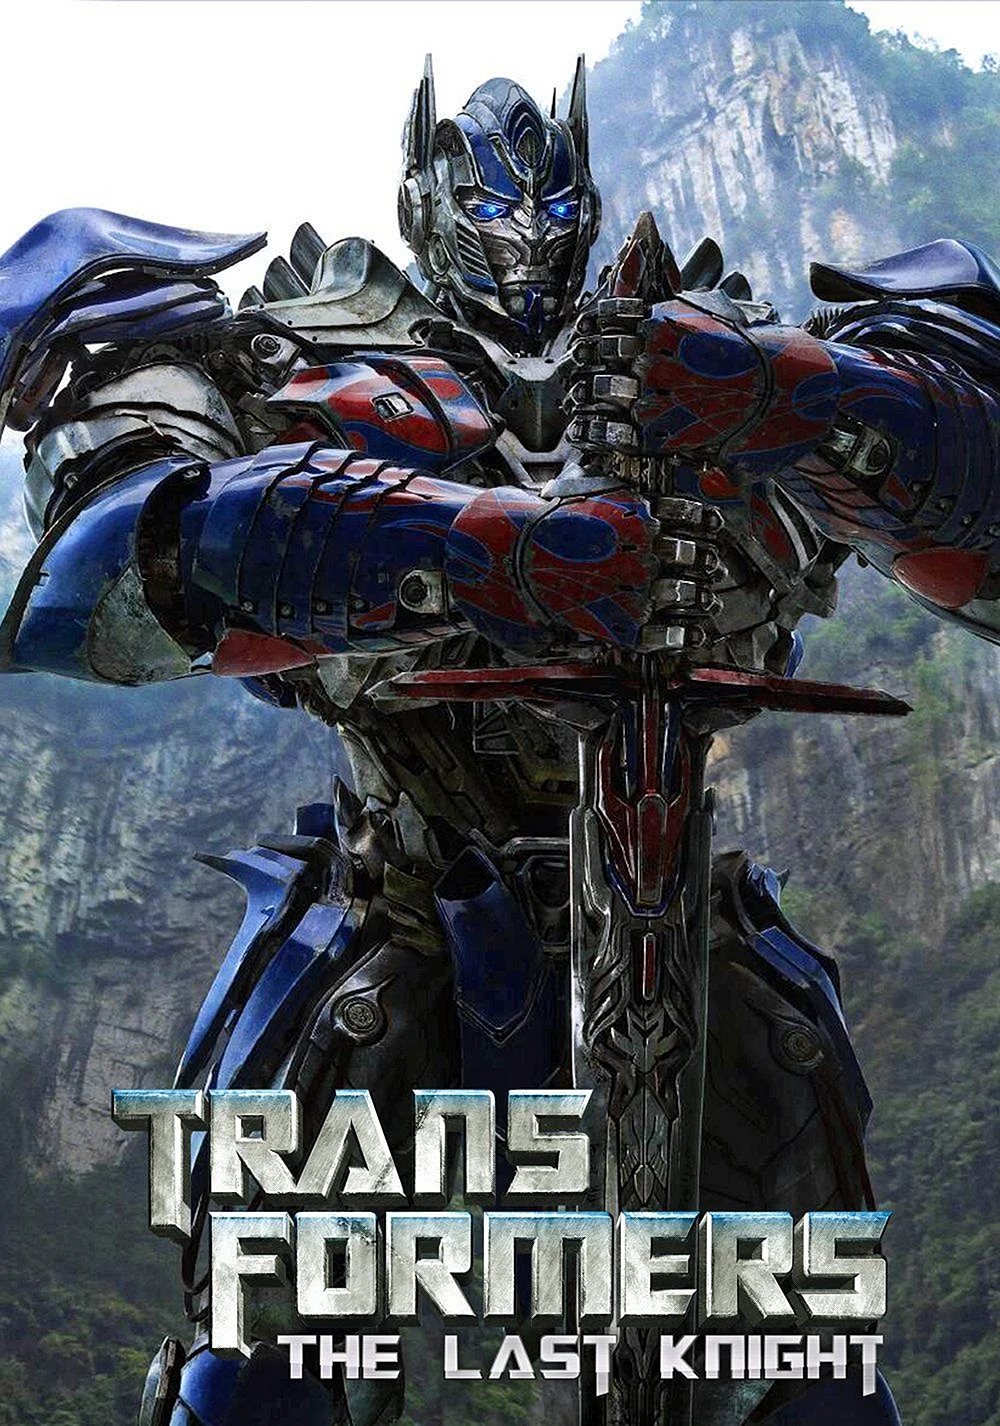 Optimus Prime Transformers Wallpaper For iPhone